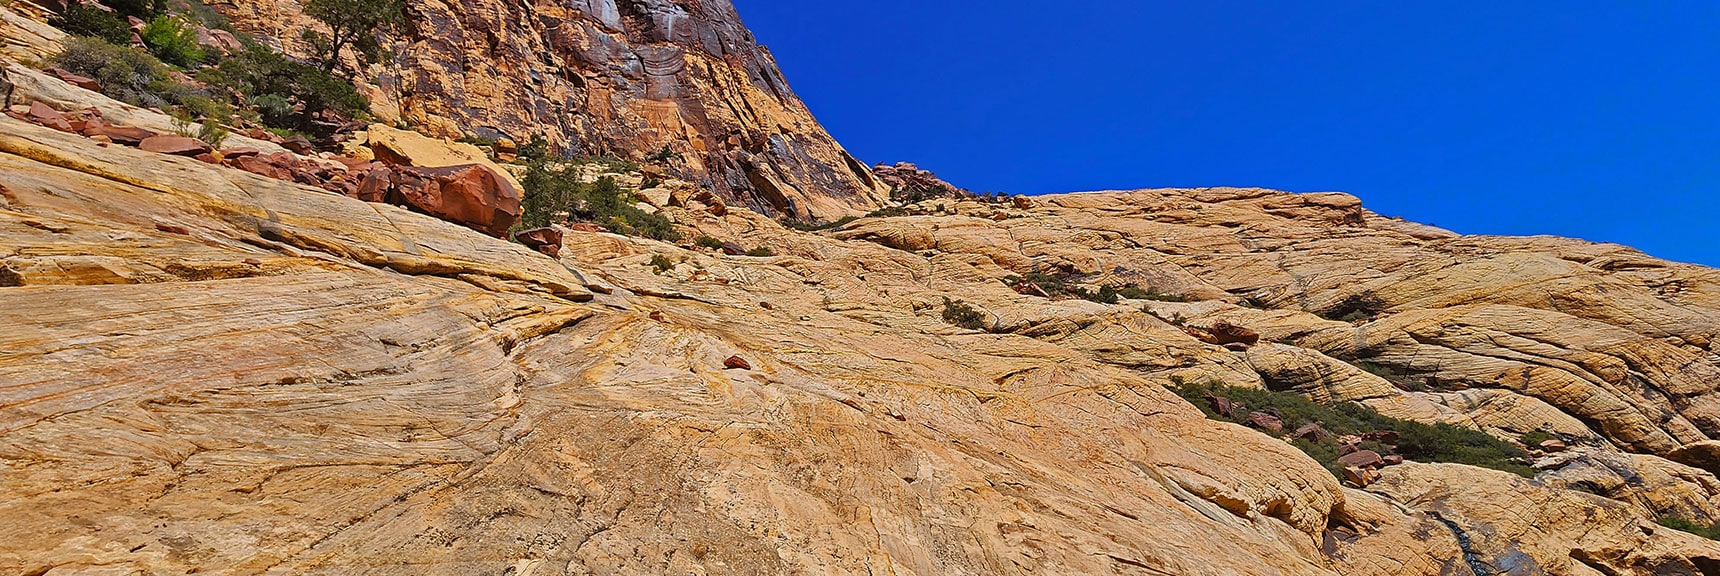 Straight Shot Up Sandstone Slab to Left Turn Toward Summit | Juniper Canyon | Red Rock Canyon National Conservation Area, Nevada | David Smith | LasVegasAreaTrails.com